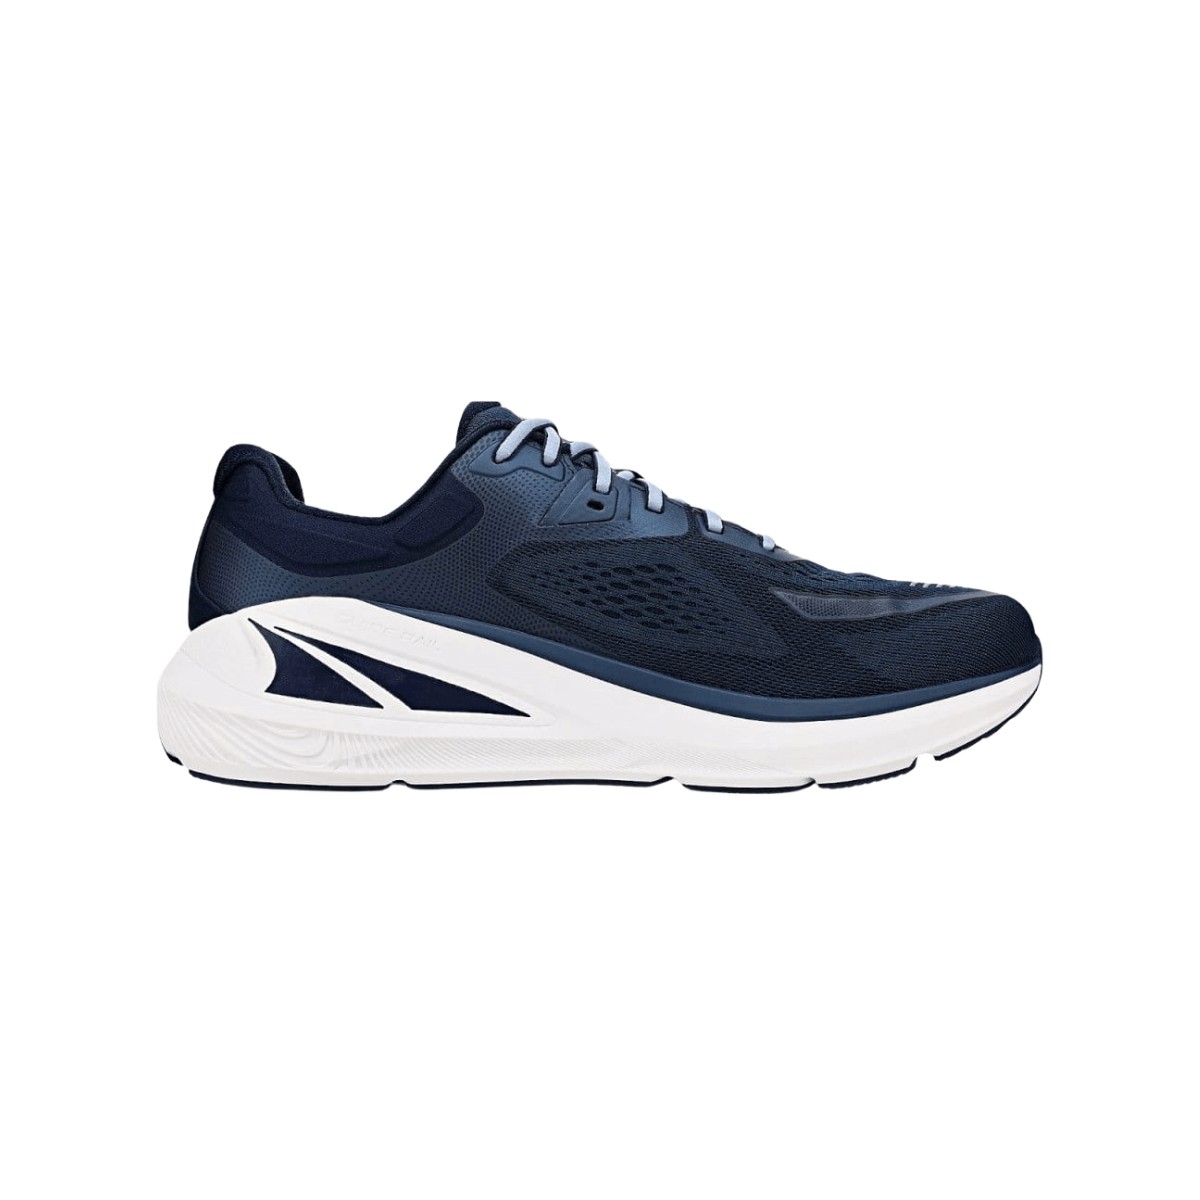 Altra Paradigm 6.0 blue Cushioning Shoes AW22, Size 42 - EUR